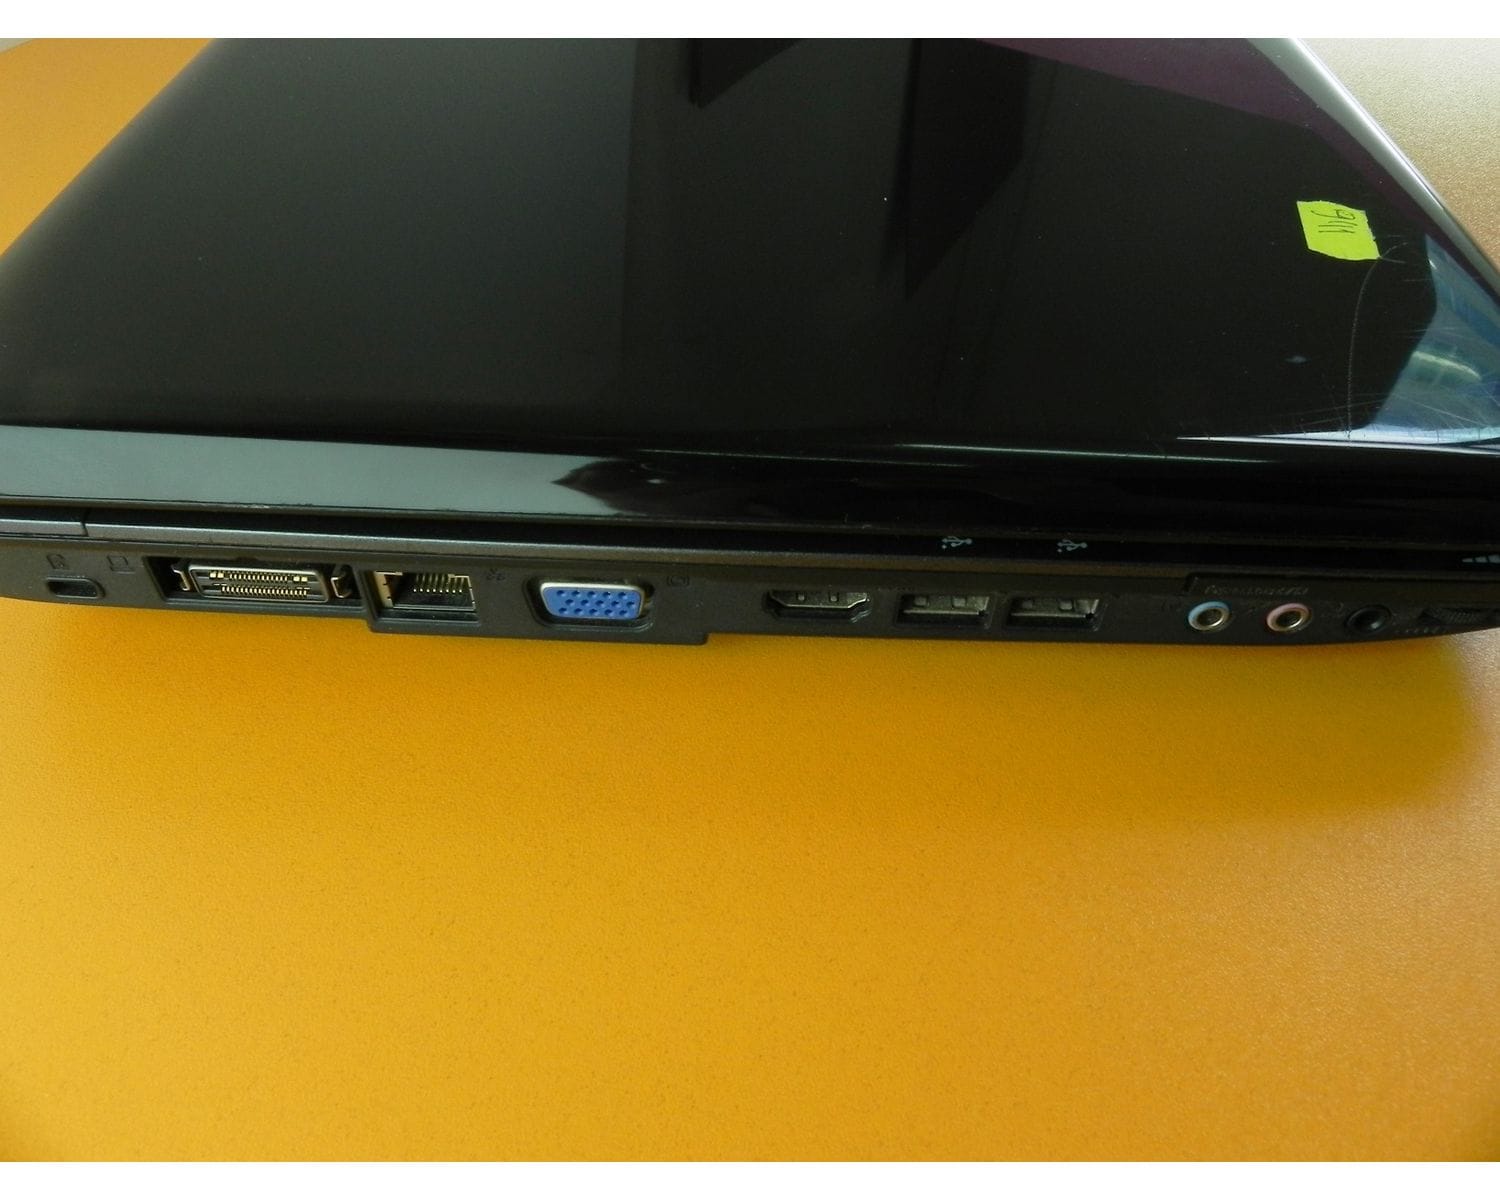 Ноутбук Acer Aspire 5530 Цена